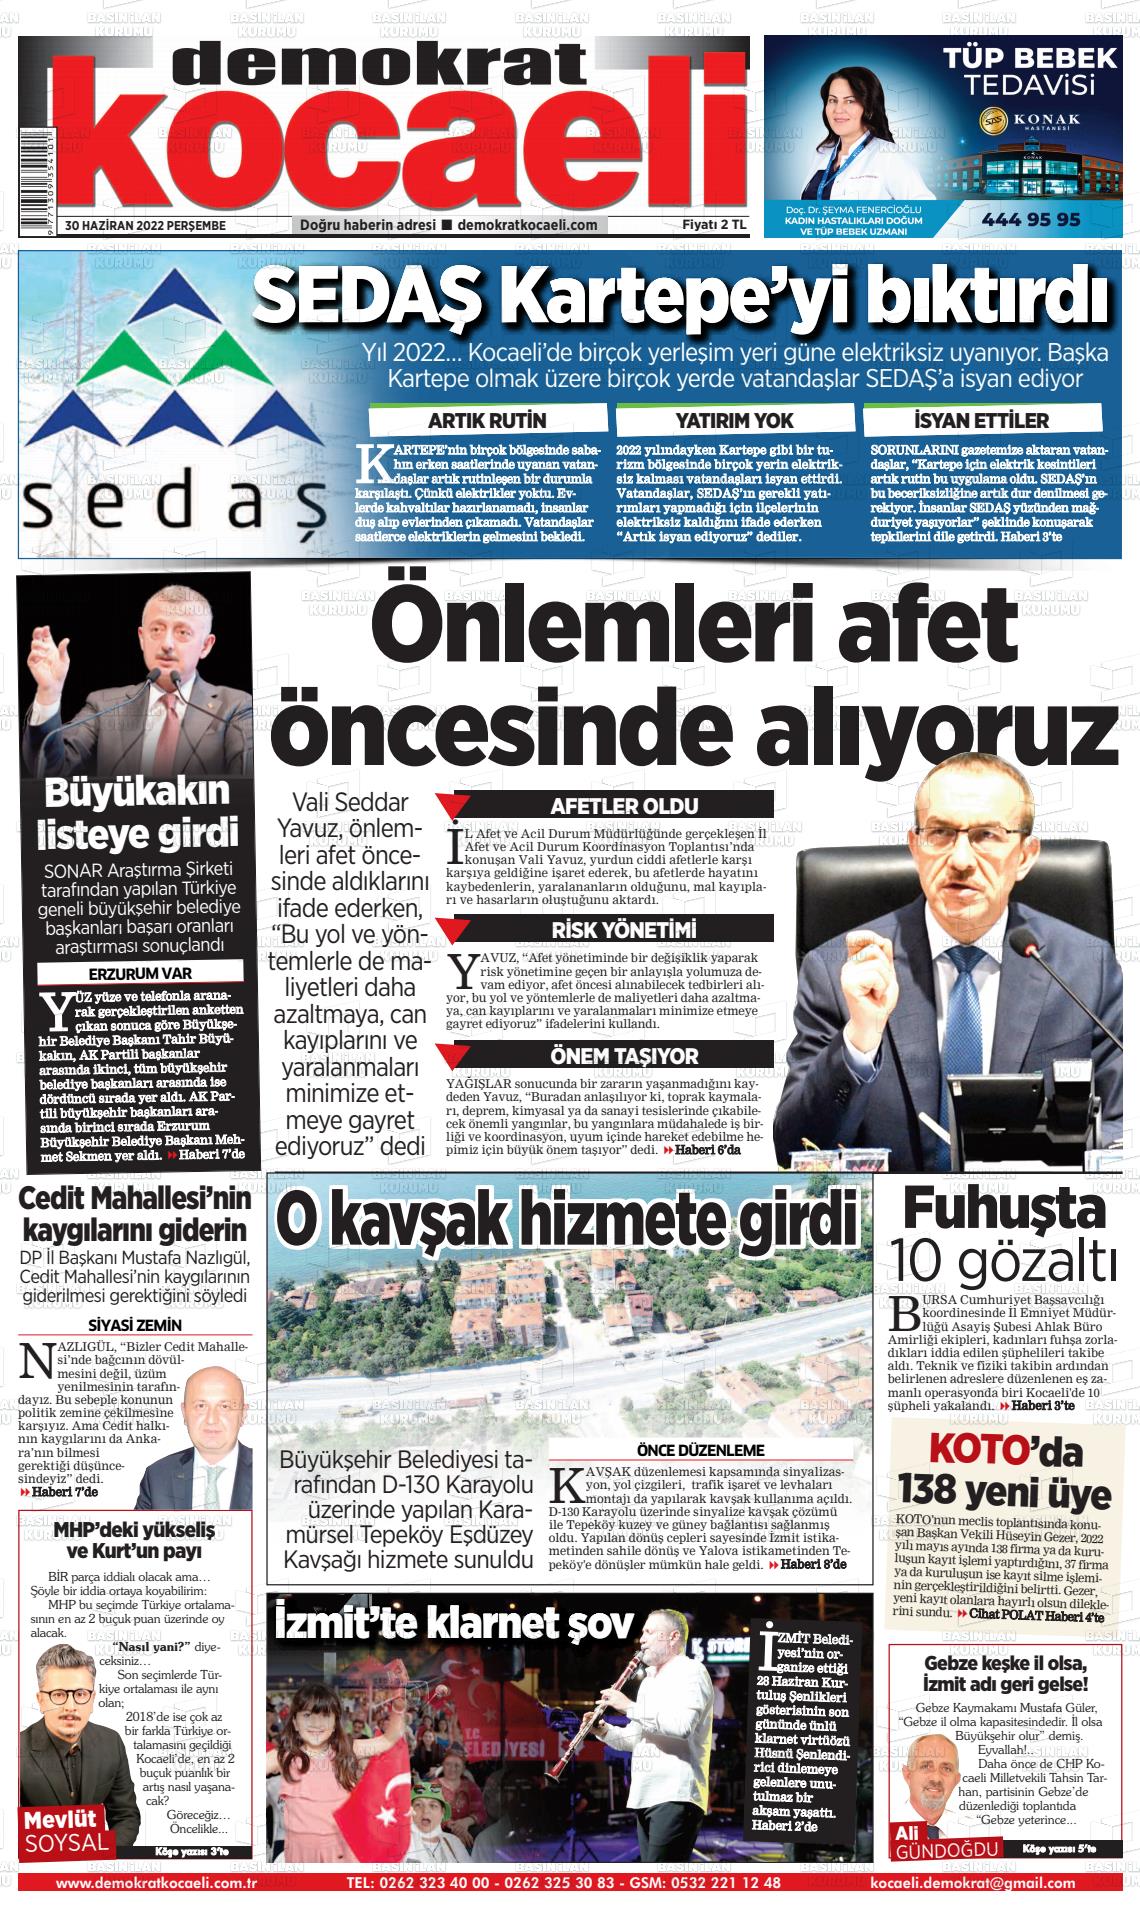 30 Haziran 2022 Demokrat Kocaeli Gazete Manşeti